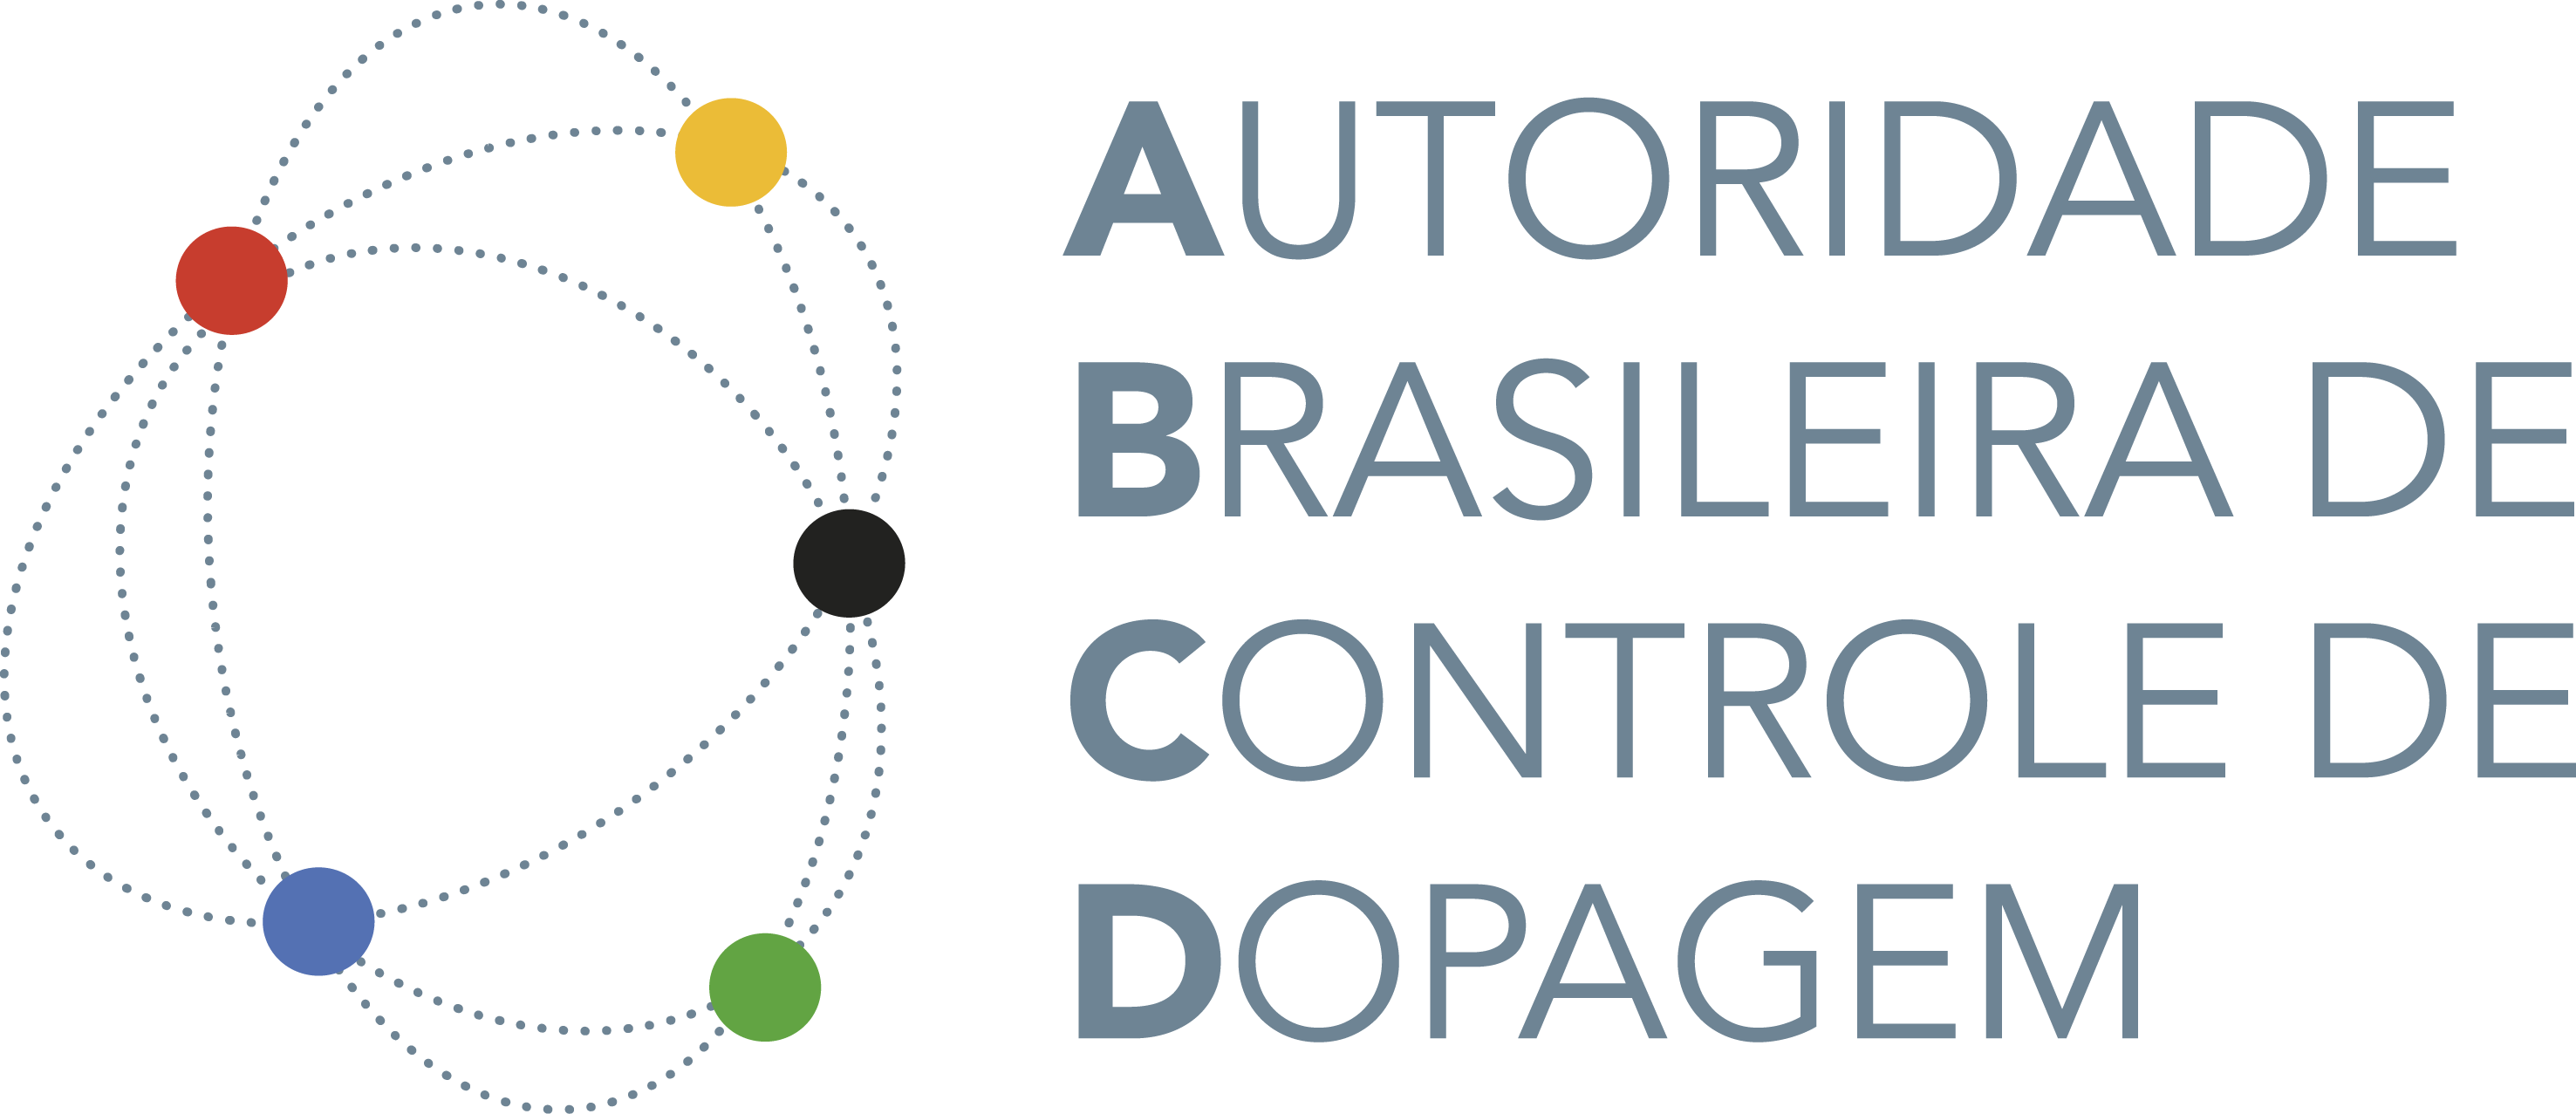 Autoridade Brasileira de Controle de Dopagem - ABCD